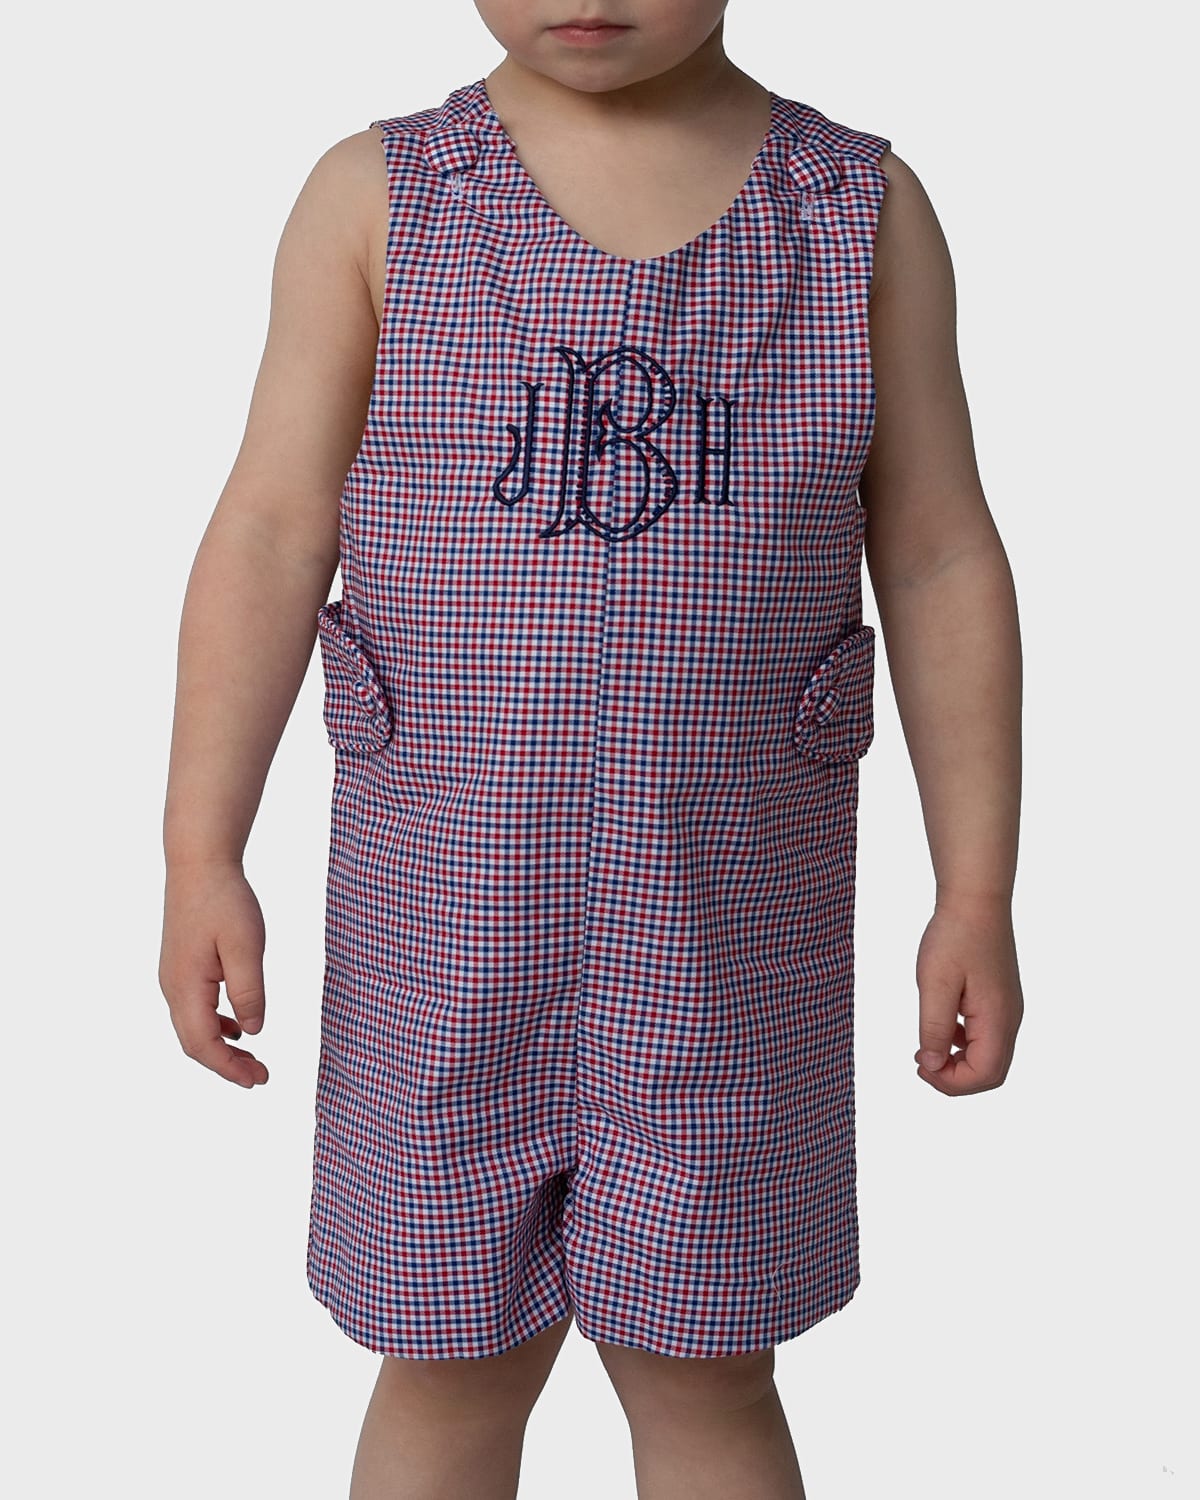 Brown Bowen And Company Babies' Plaid Jon Jon - Monogram Option In Red White Blue